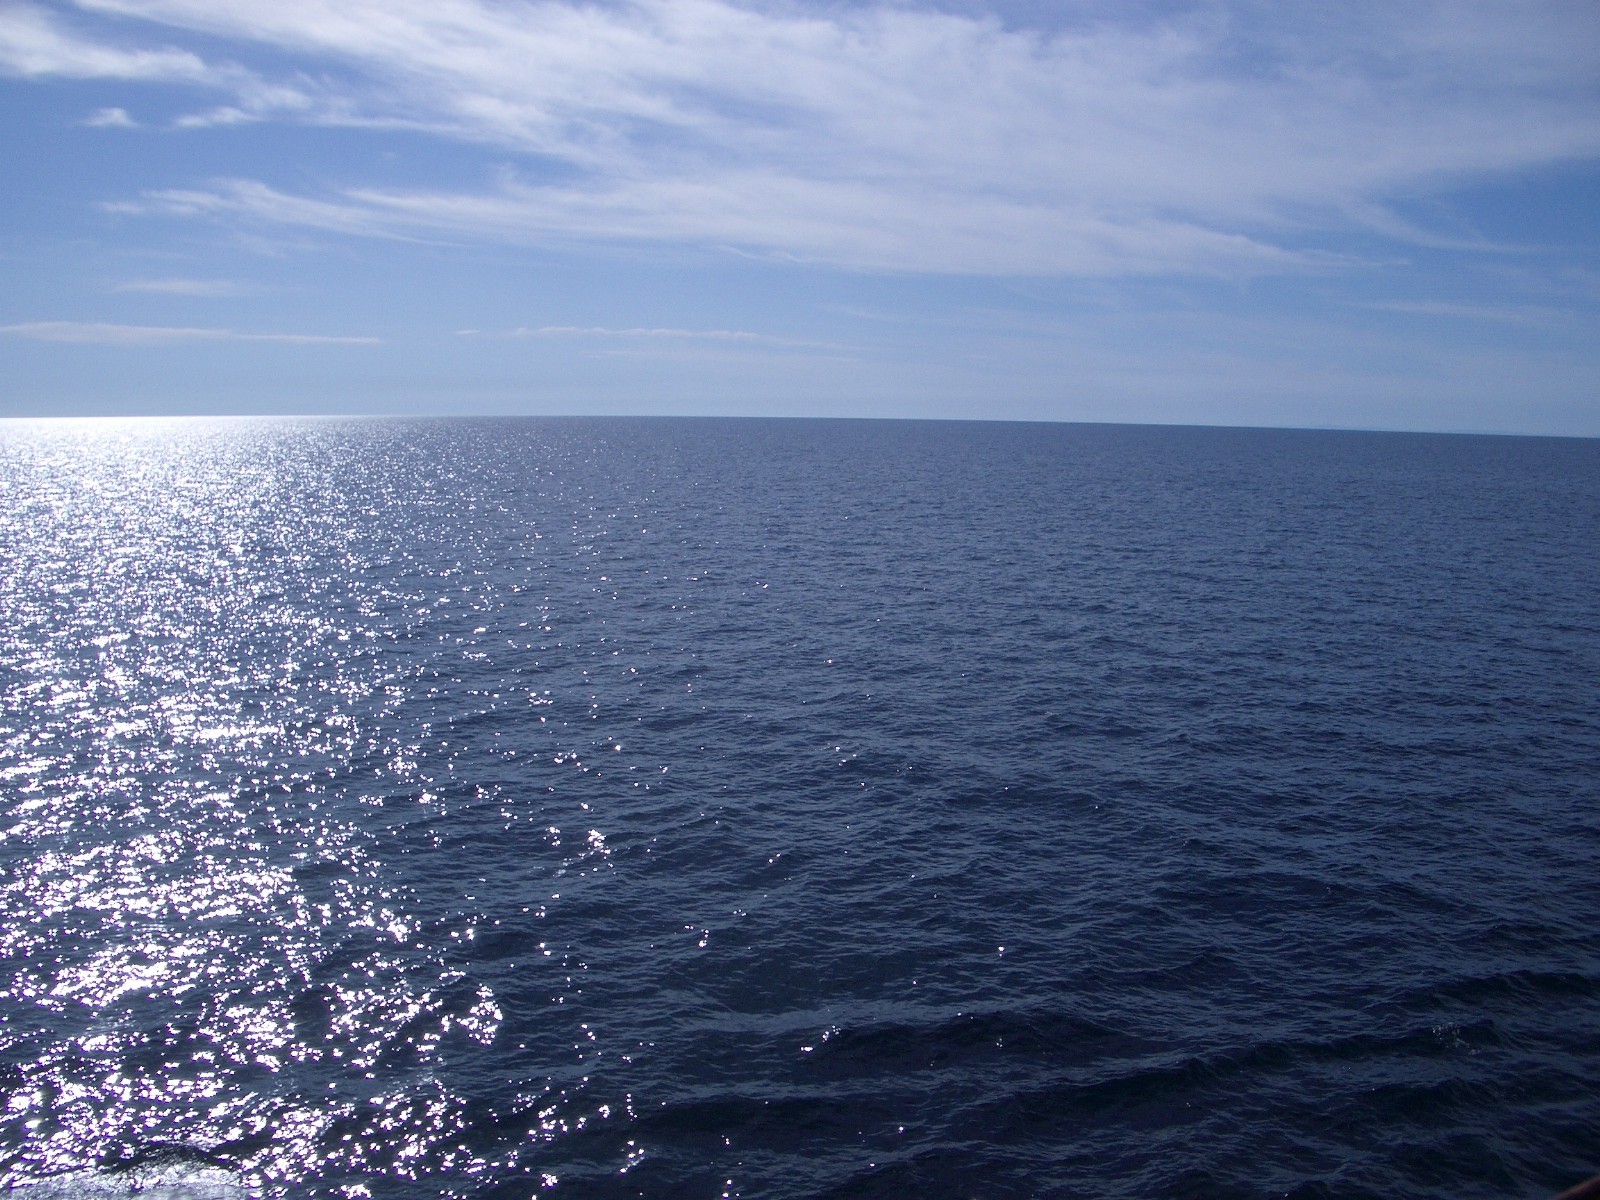 На виднеющемся море. Черное море штиль. Штиль в тихом океане. Открытое море. Штиль на море.